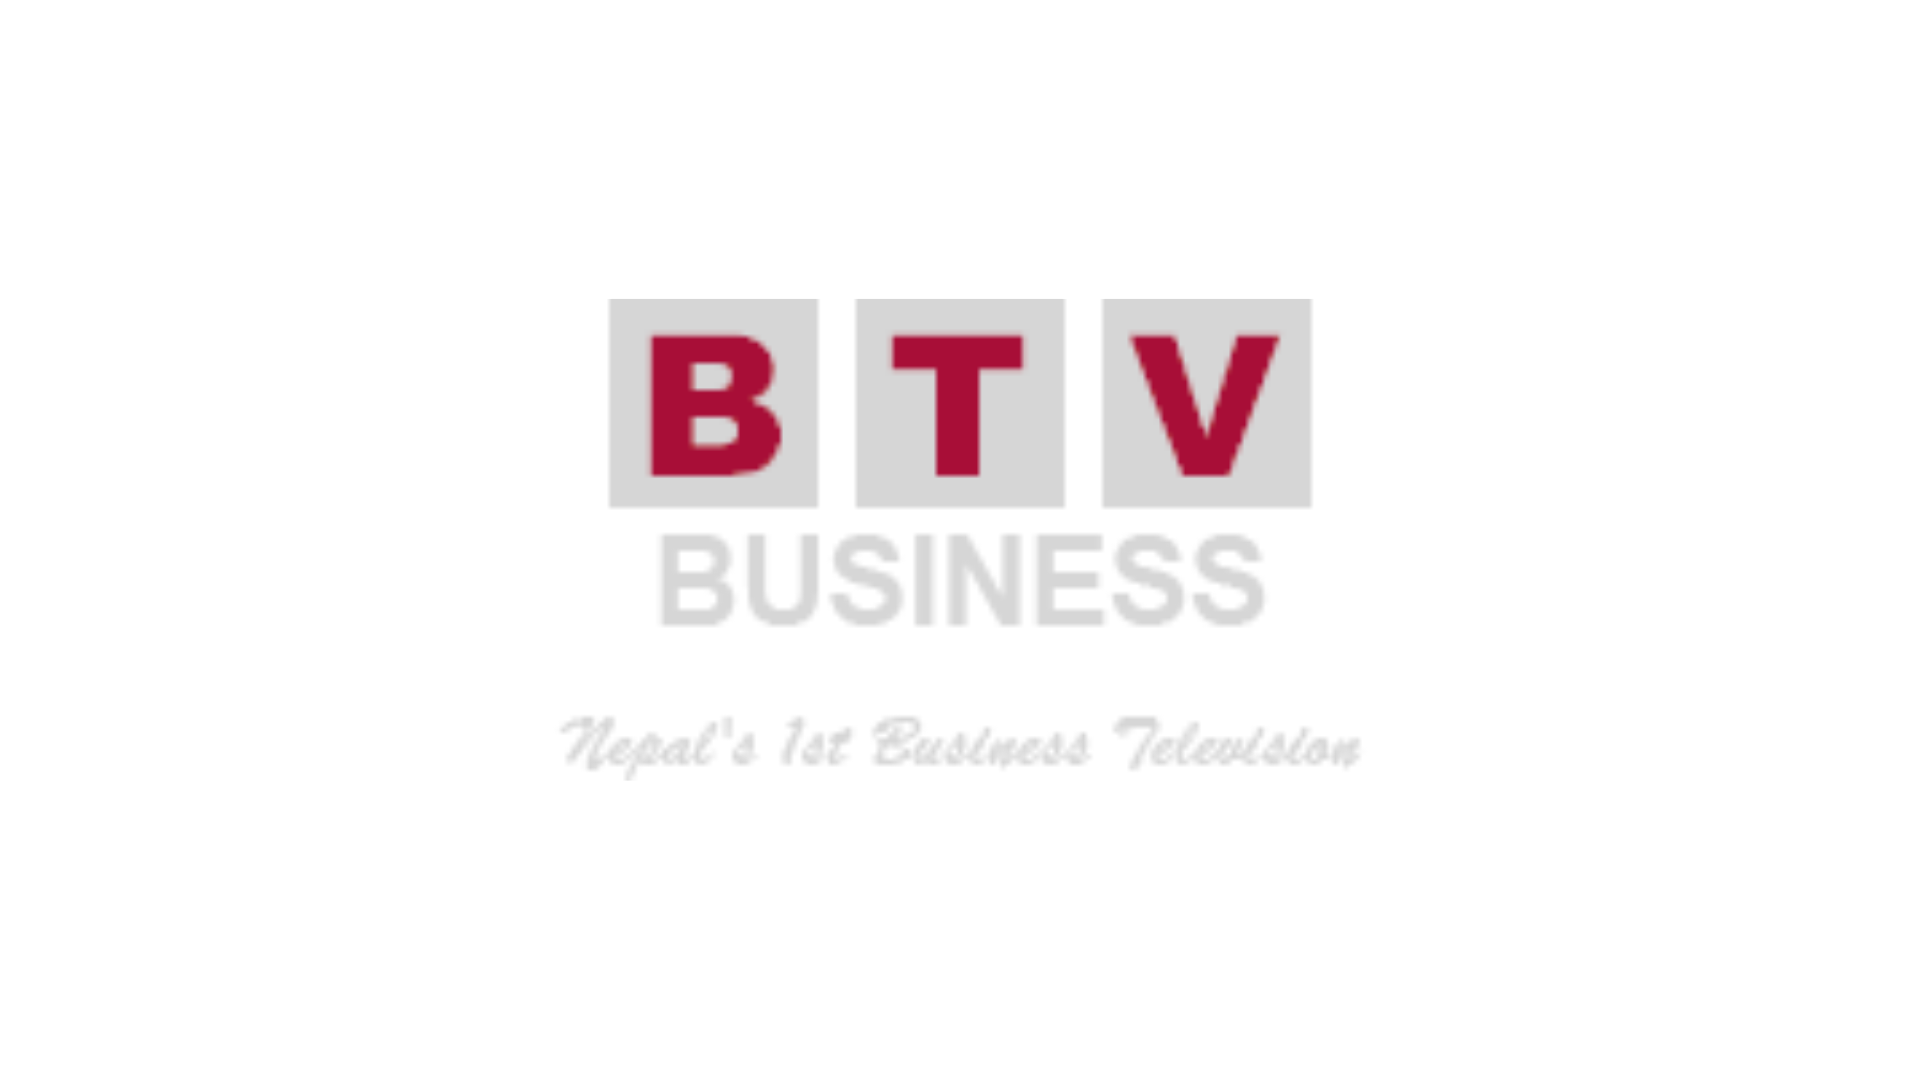 btv business